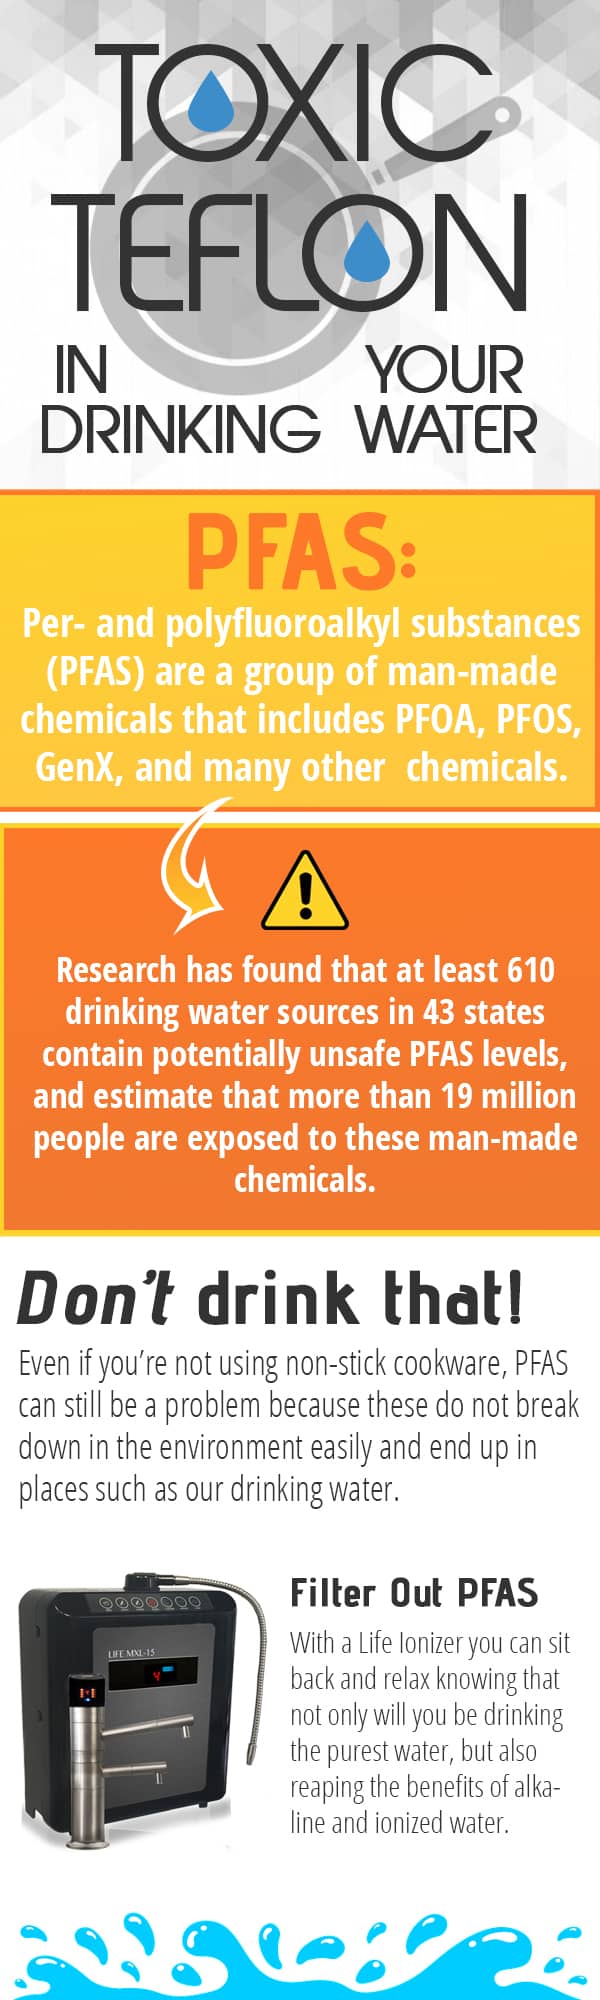 Toxic Teflon Article Infographic